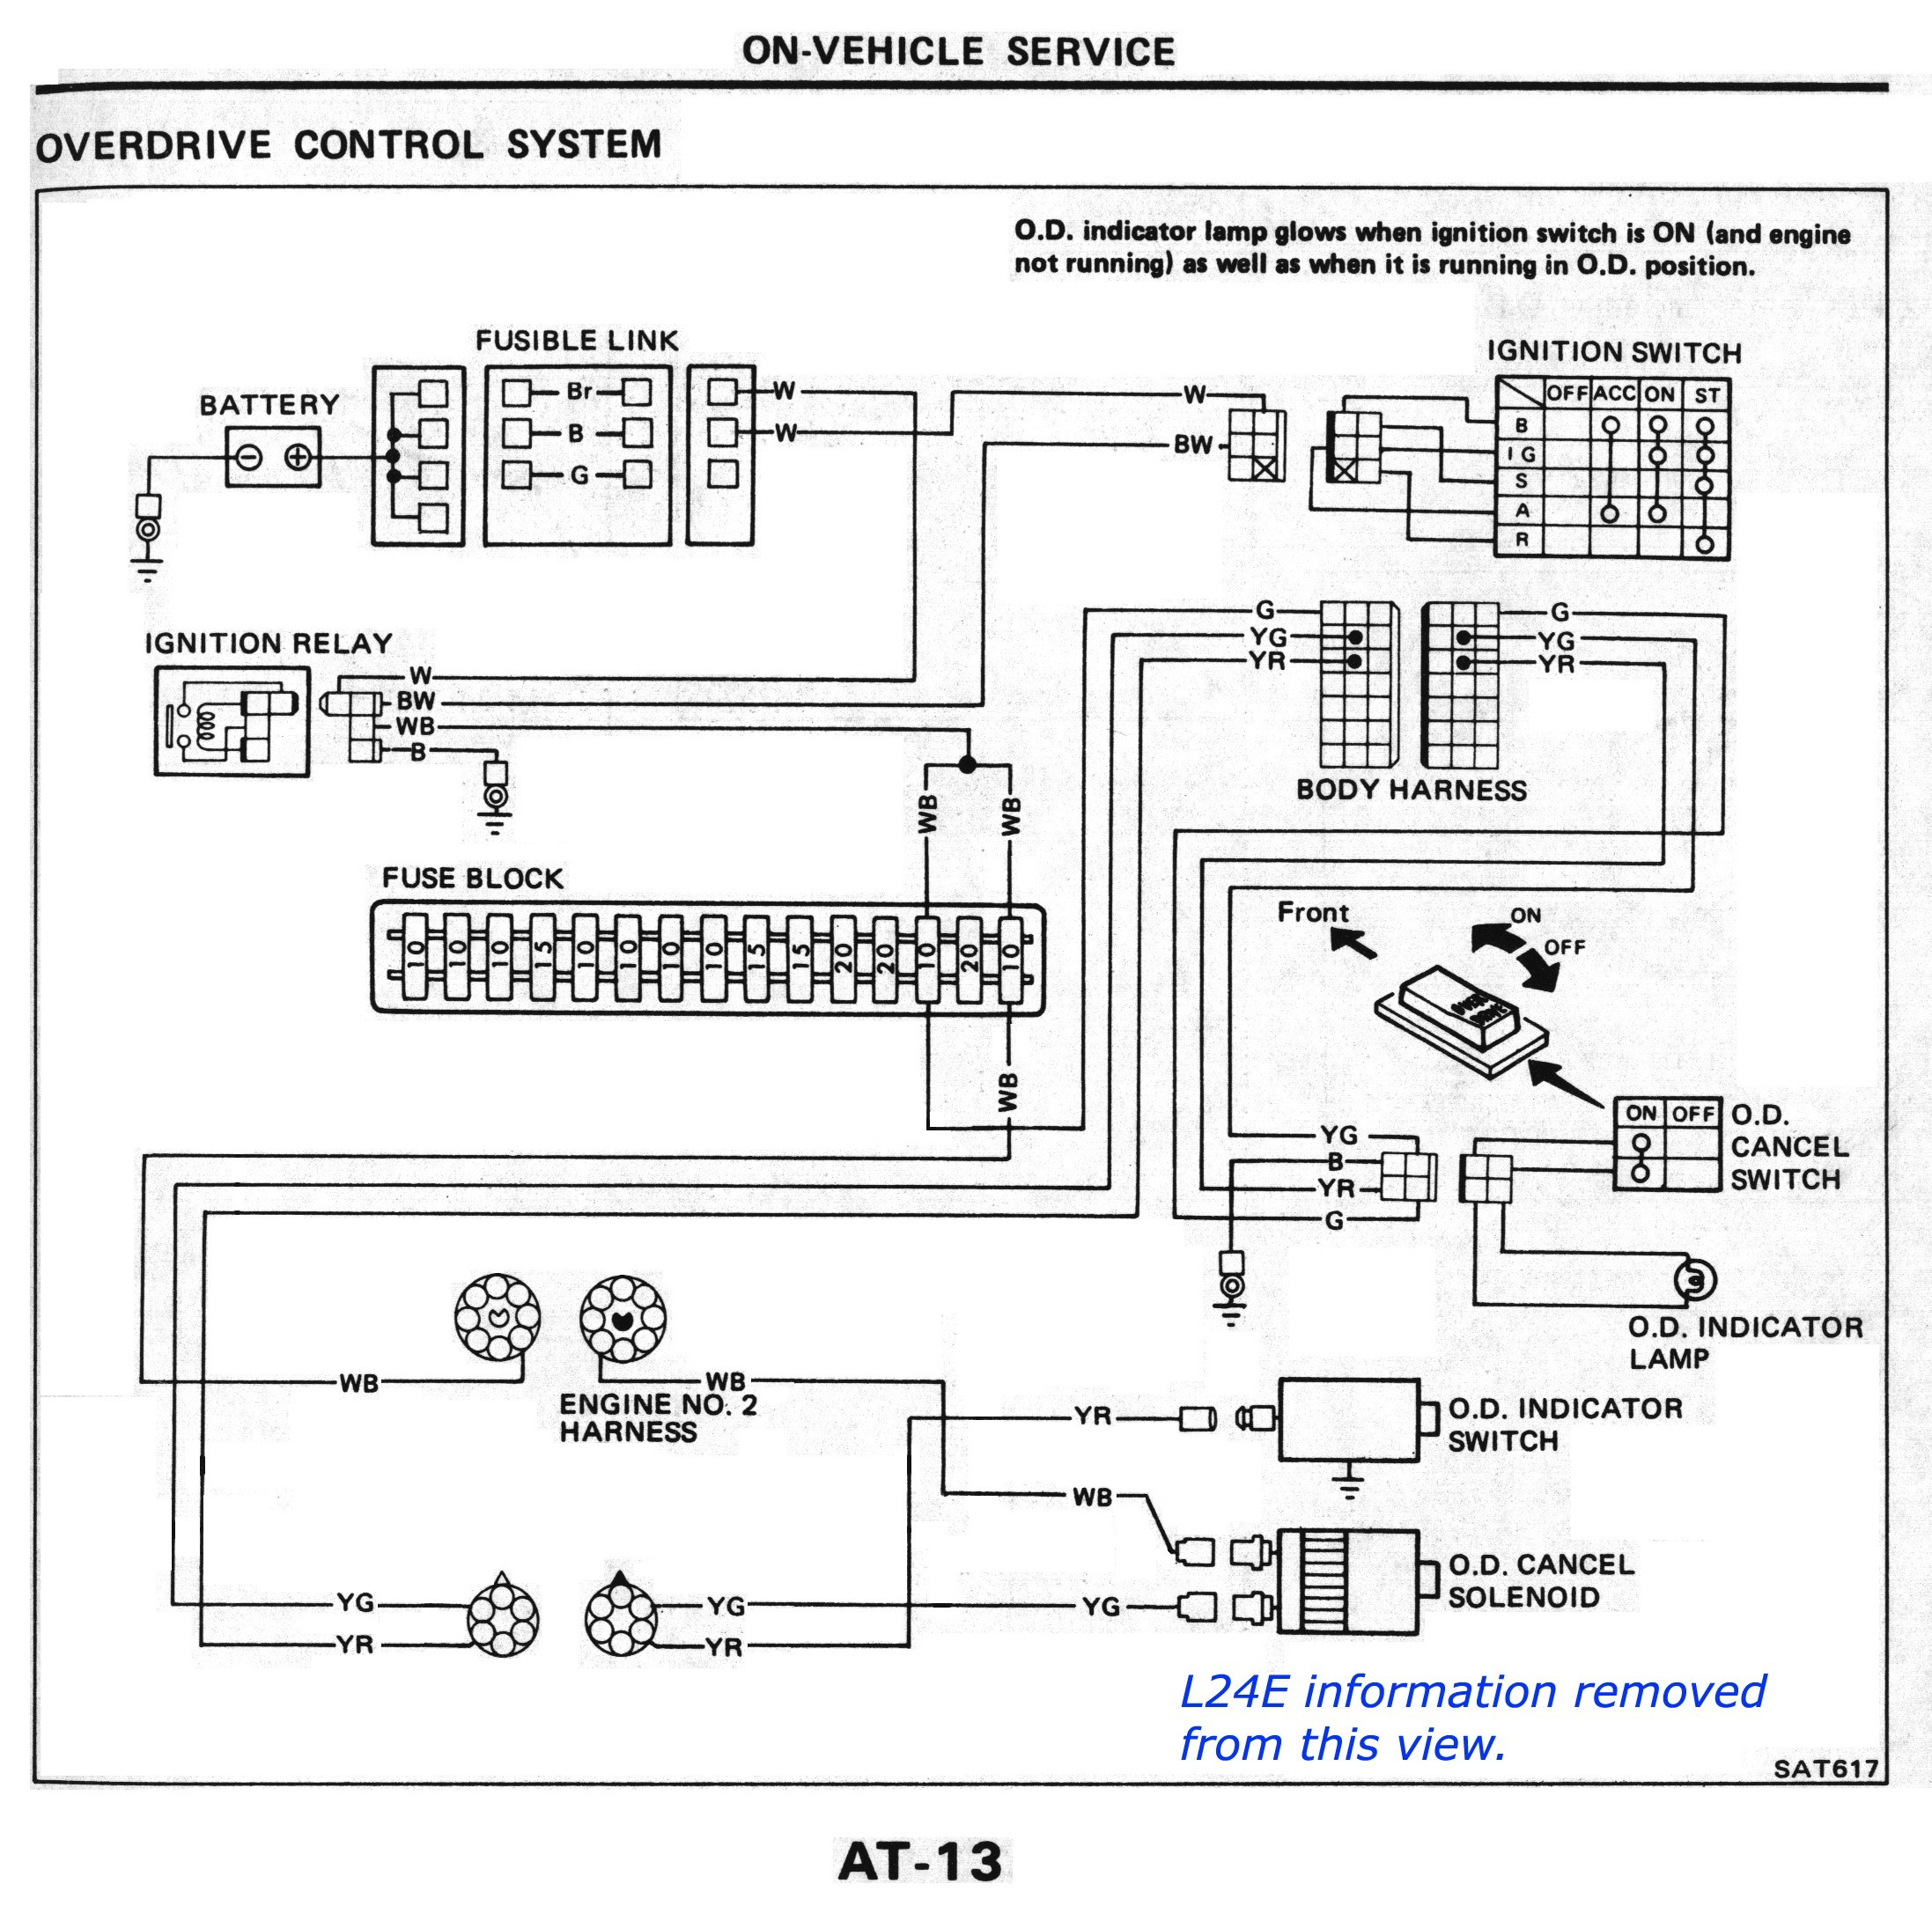 Jump Start Car Diagram Nissandiesel forums • View topic L4n71b Od at 1983 84 Of Jump Start Car Diagram